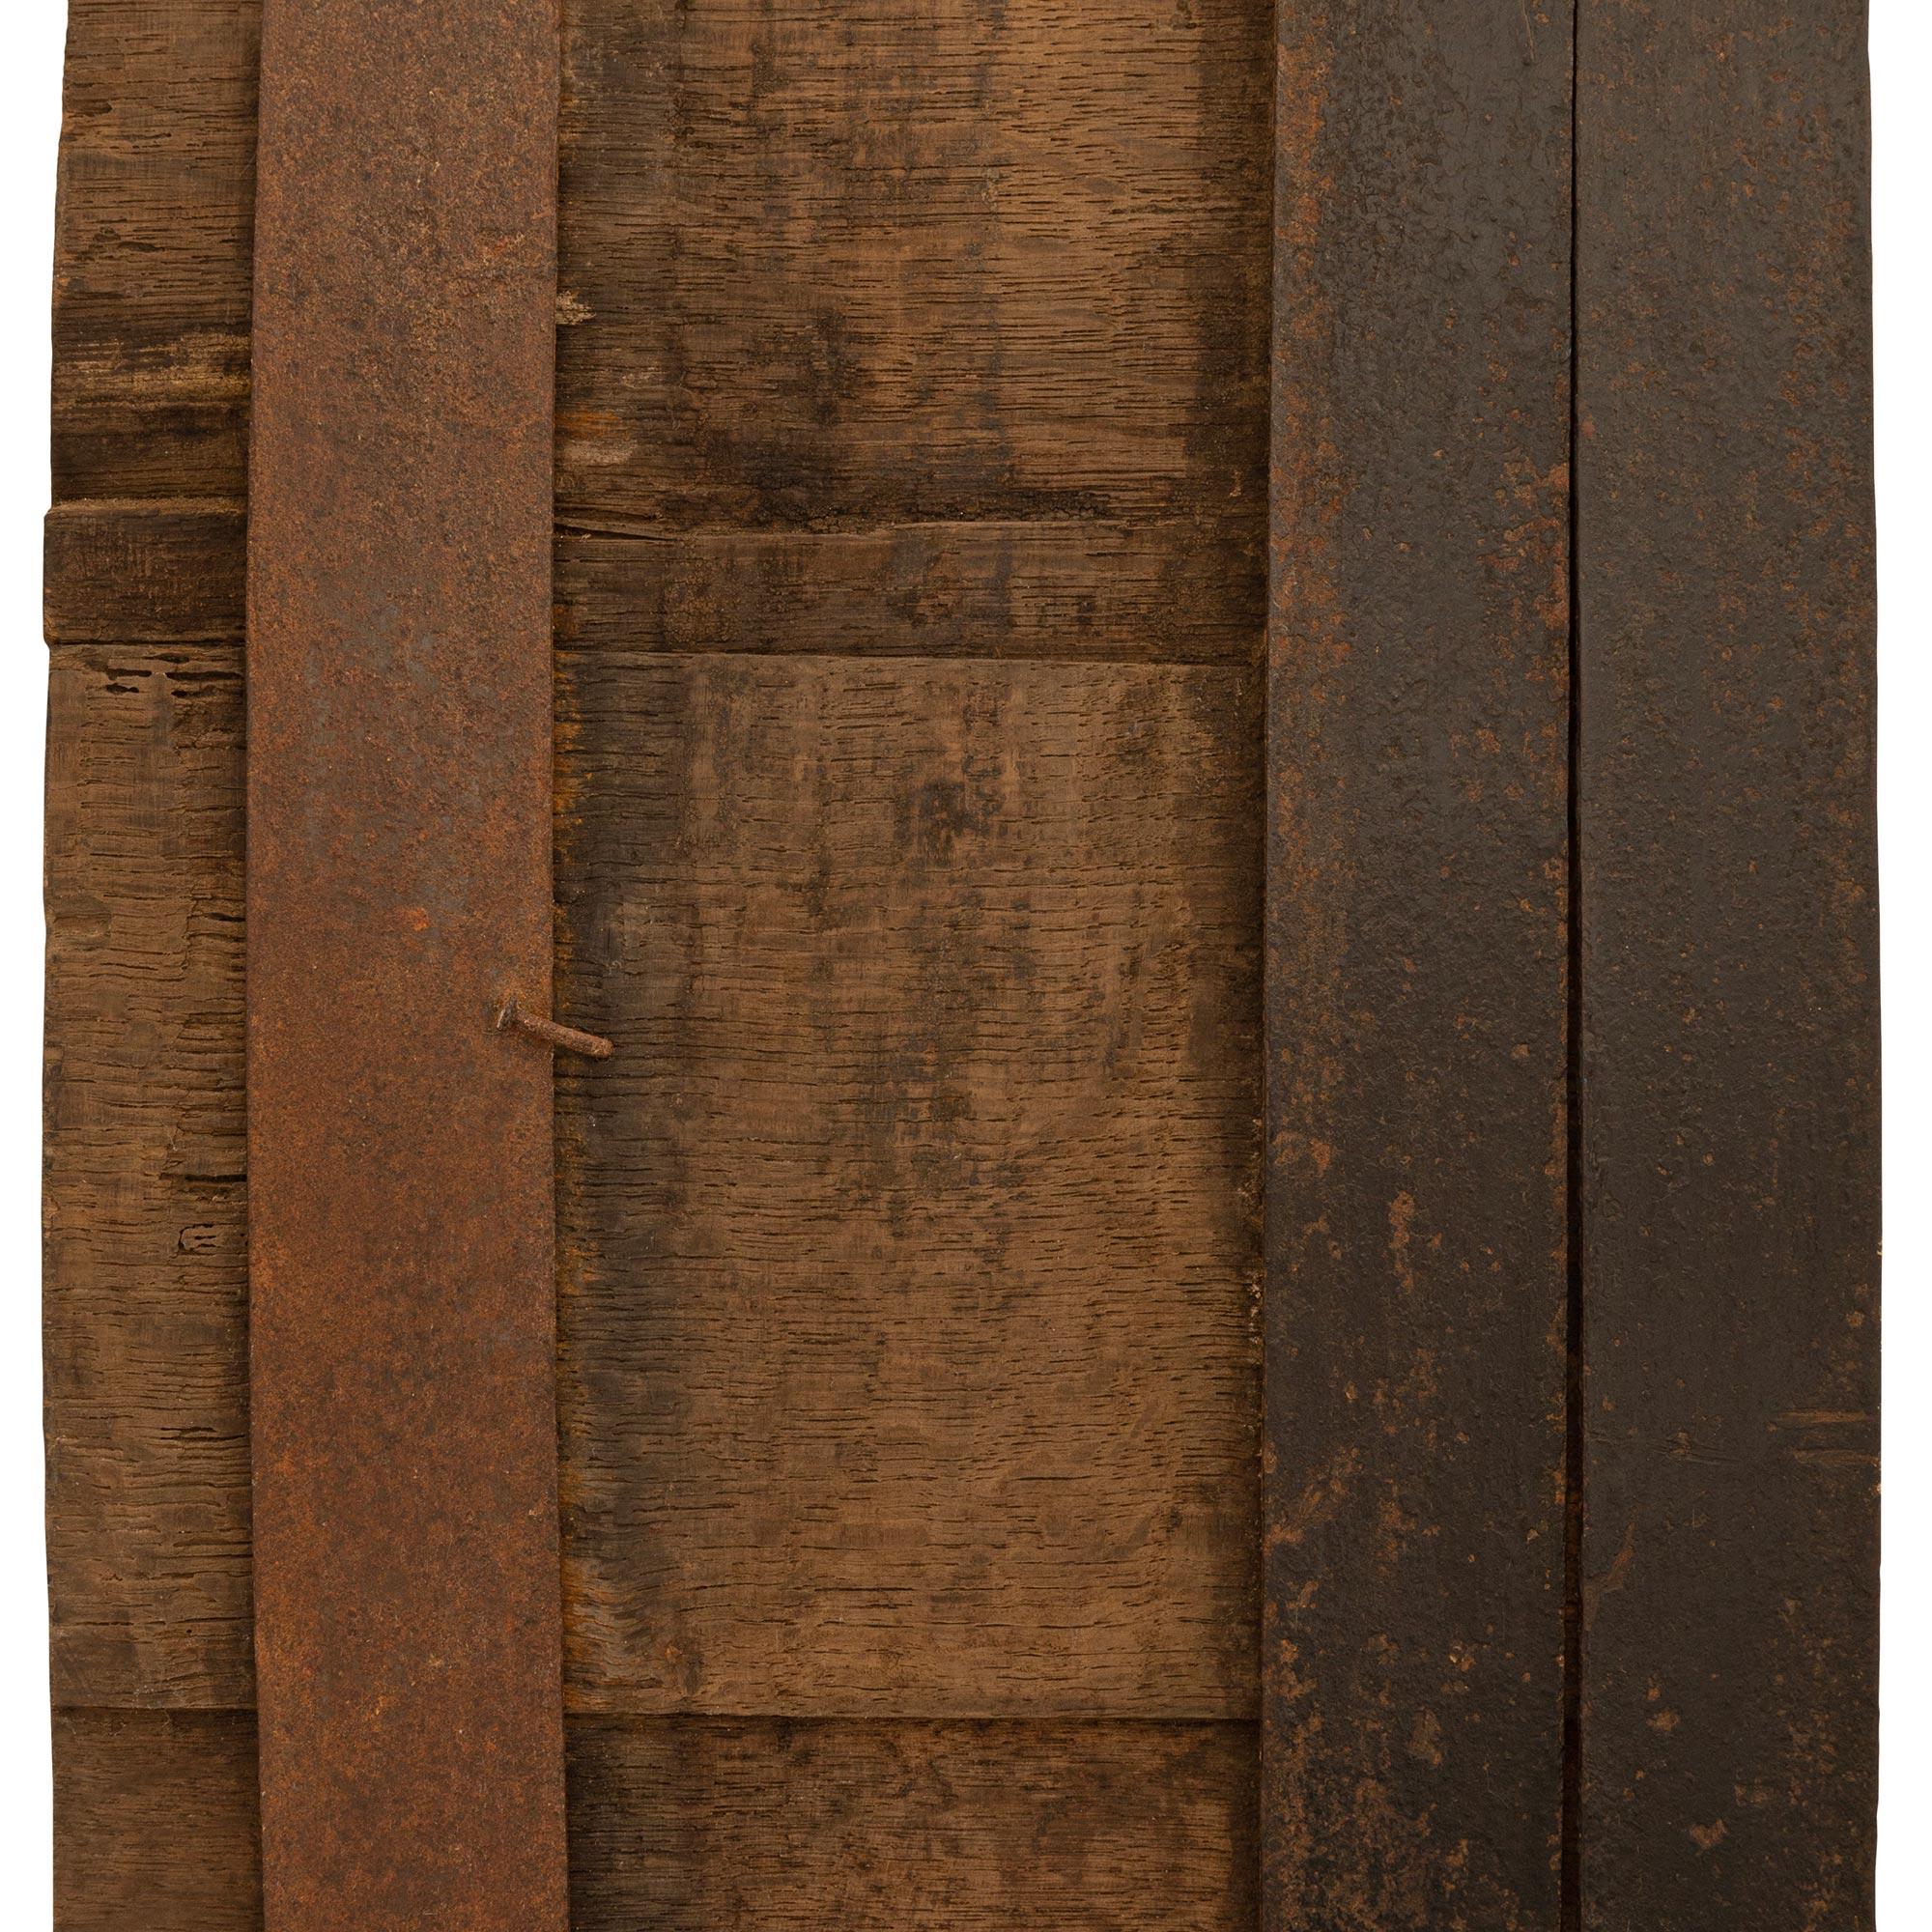 French 19th Century Cognac/Wine Oak Barrel Wall Decor For Sale 3